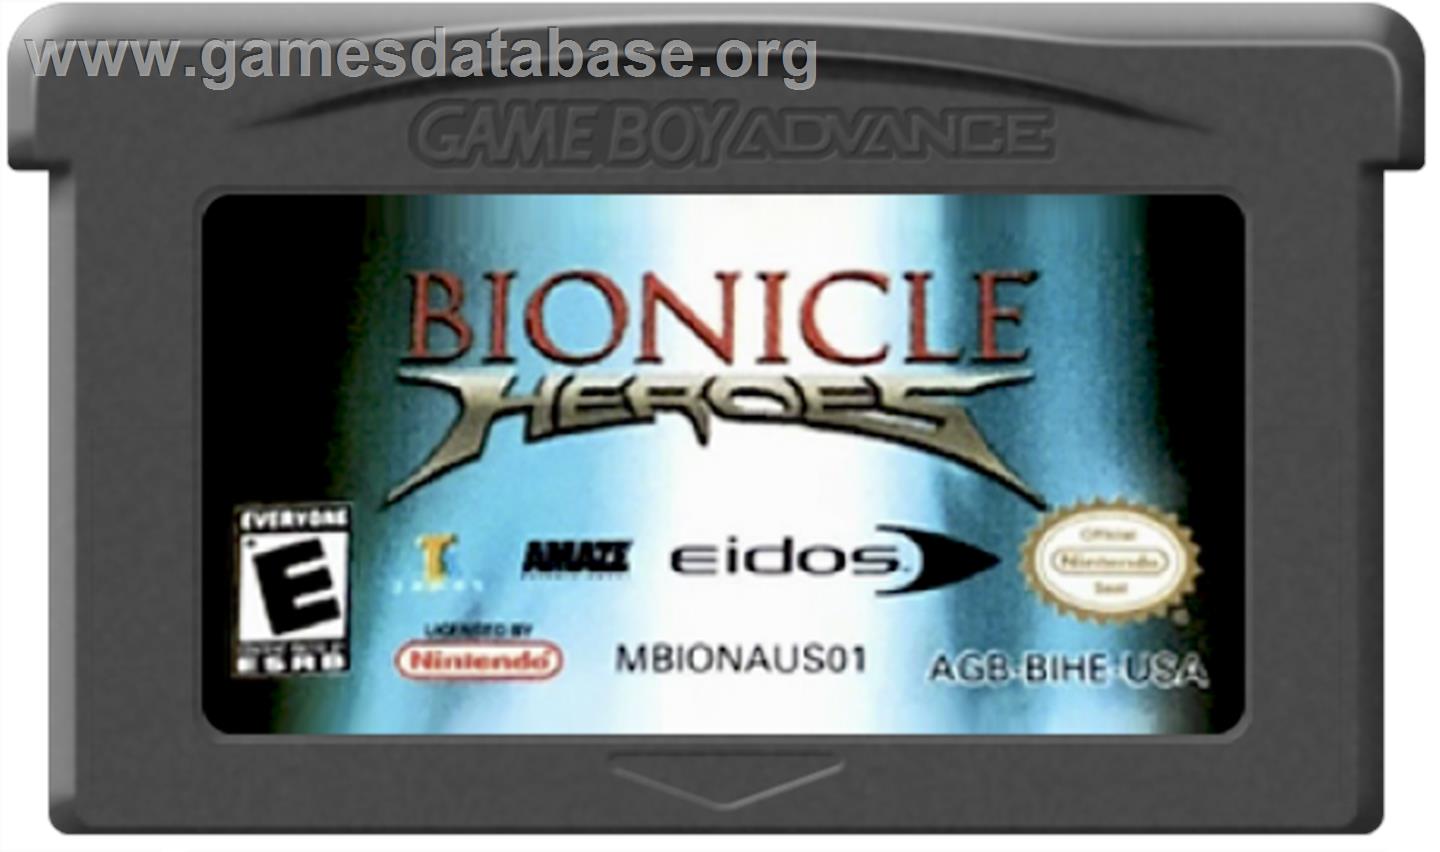 Bionicle Heroes - Nintendo Game Boy Advance - Artwork - Cartridge